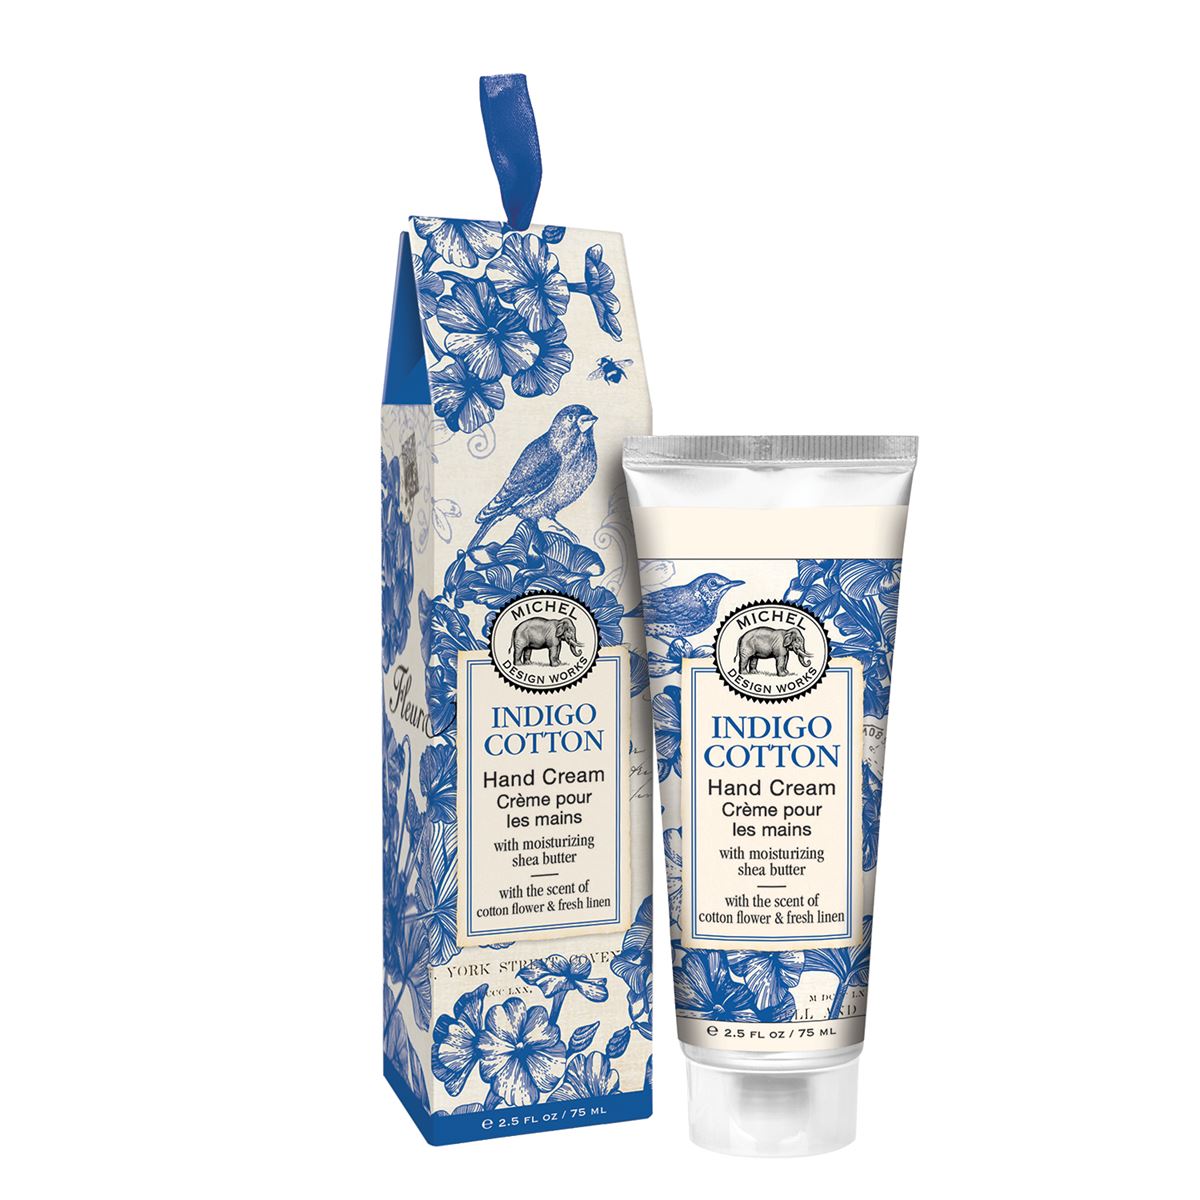 Indigo Cotton Hand Cream 2.5 oz. - Luxurious Shea Butter Blend in Decorative Gift Box